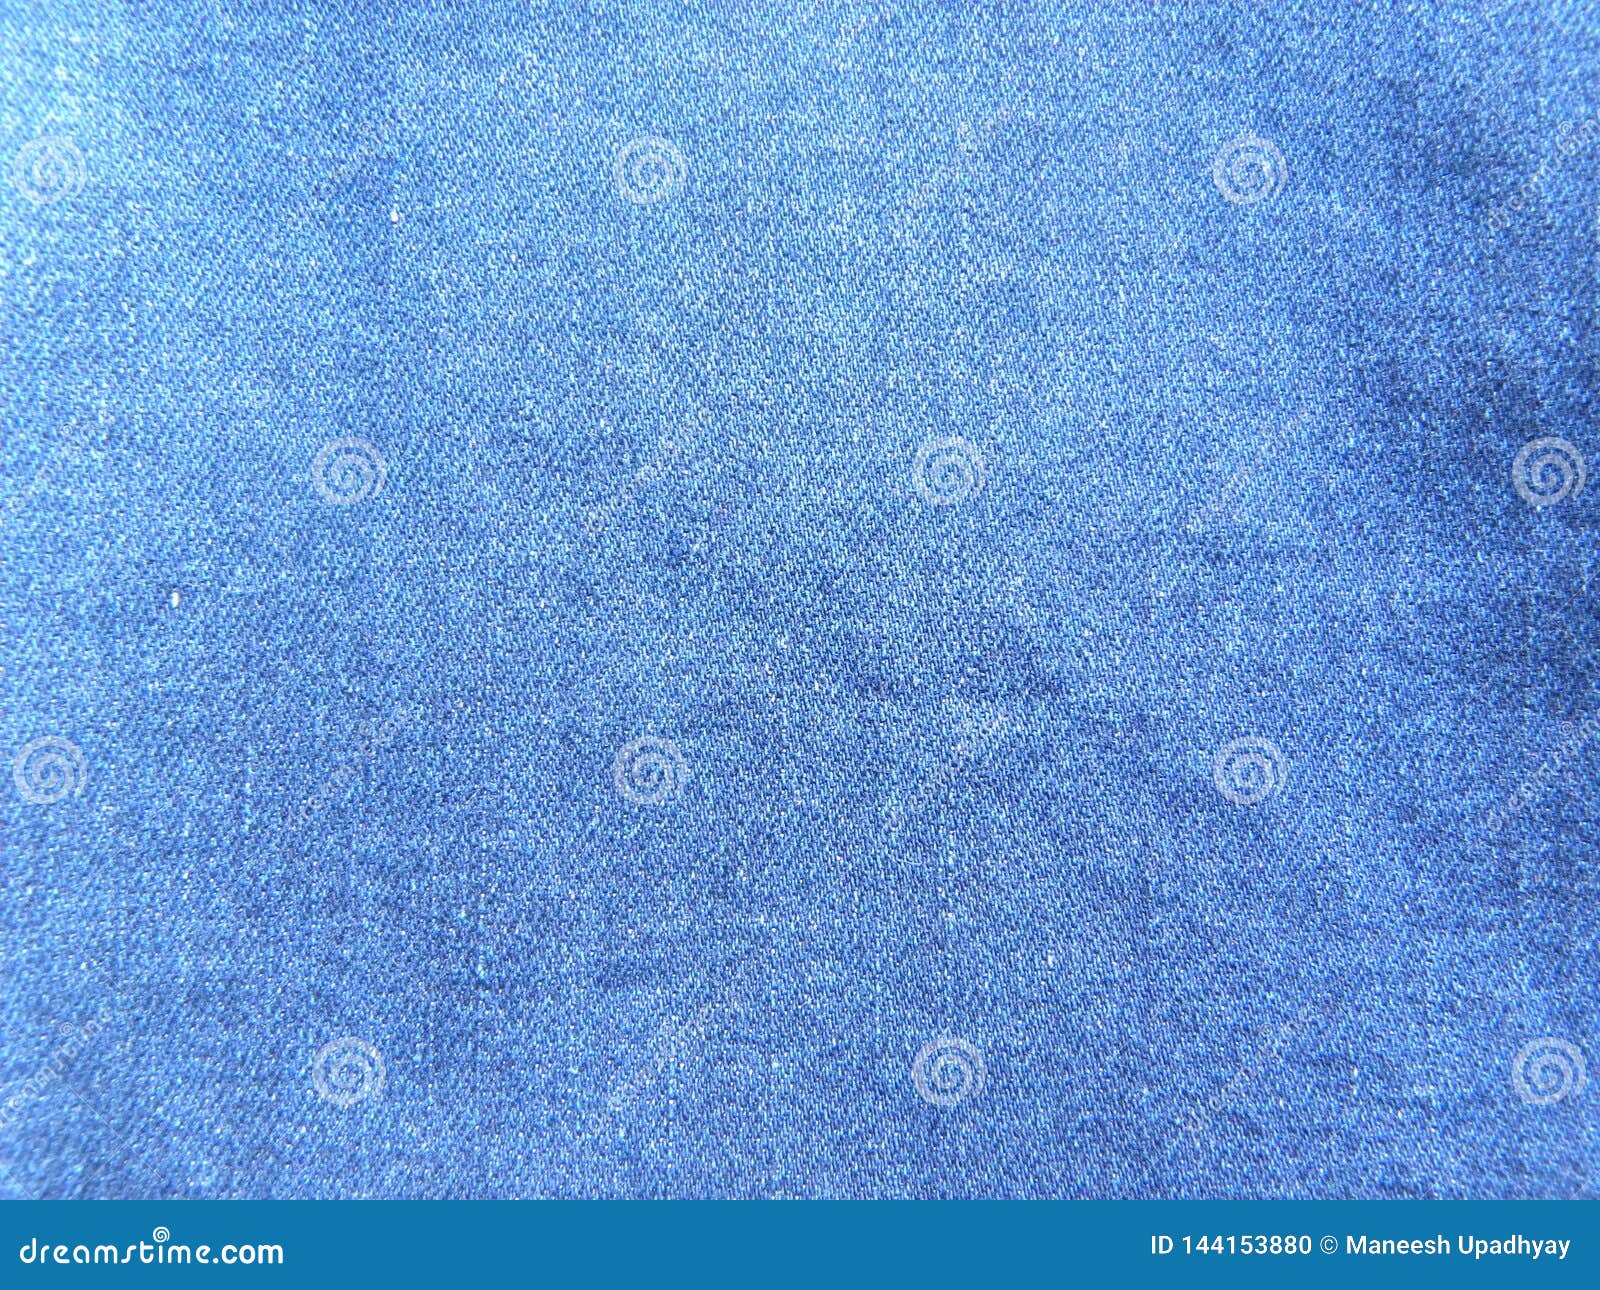 Indigo Color Rustic Denim Jeans Background Stock Photo - Image of blue,  background: 144153880